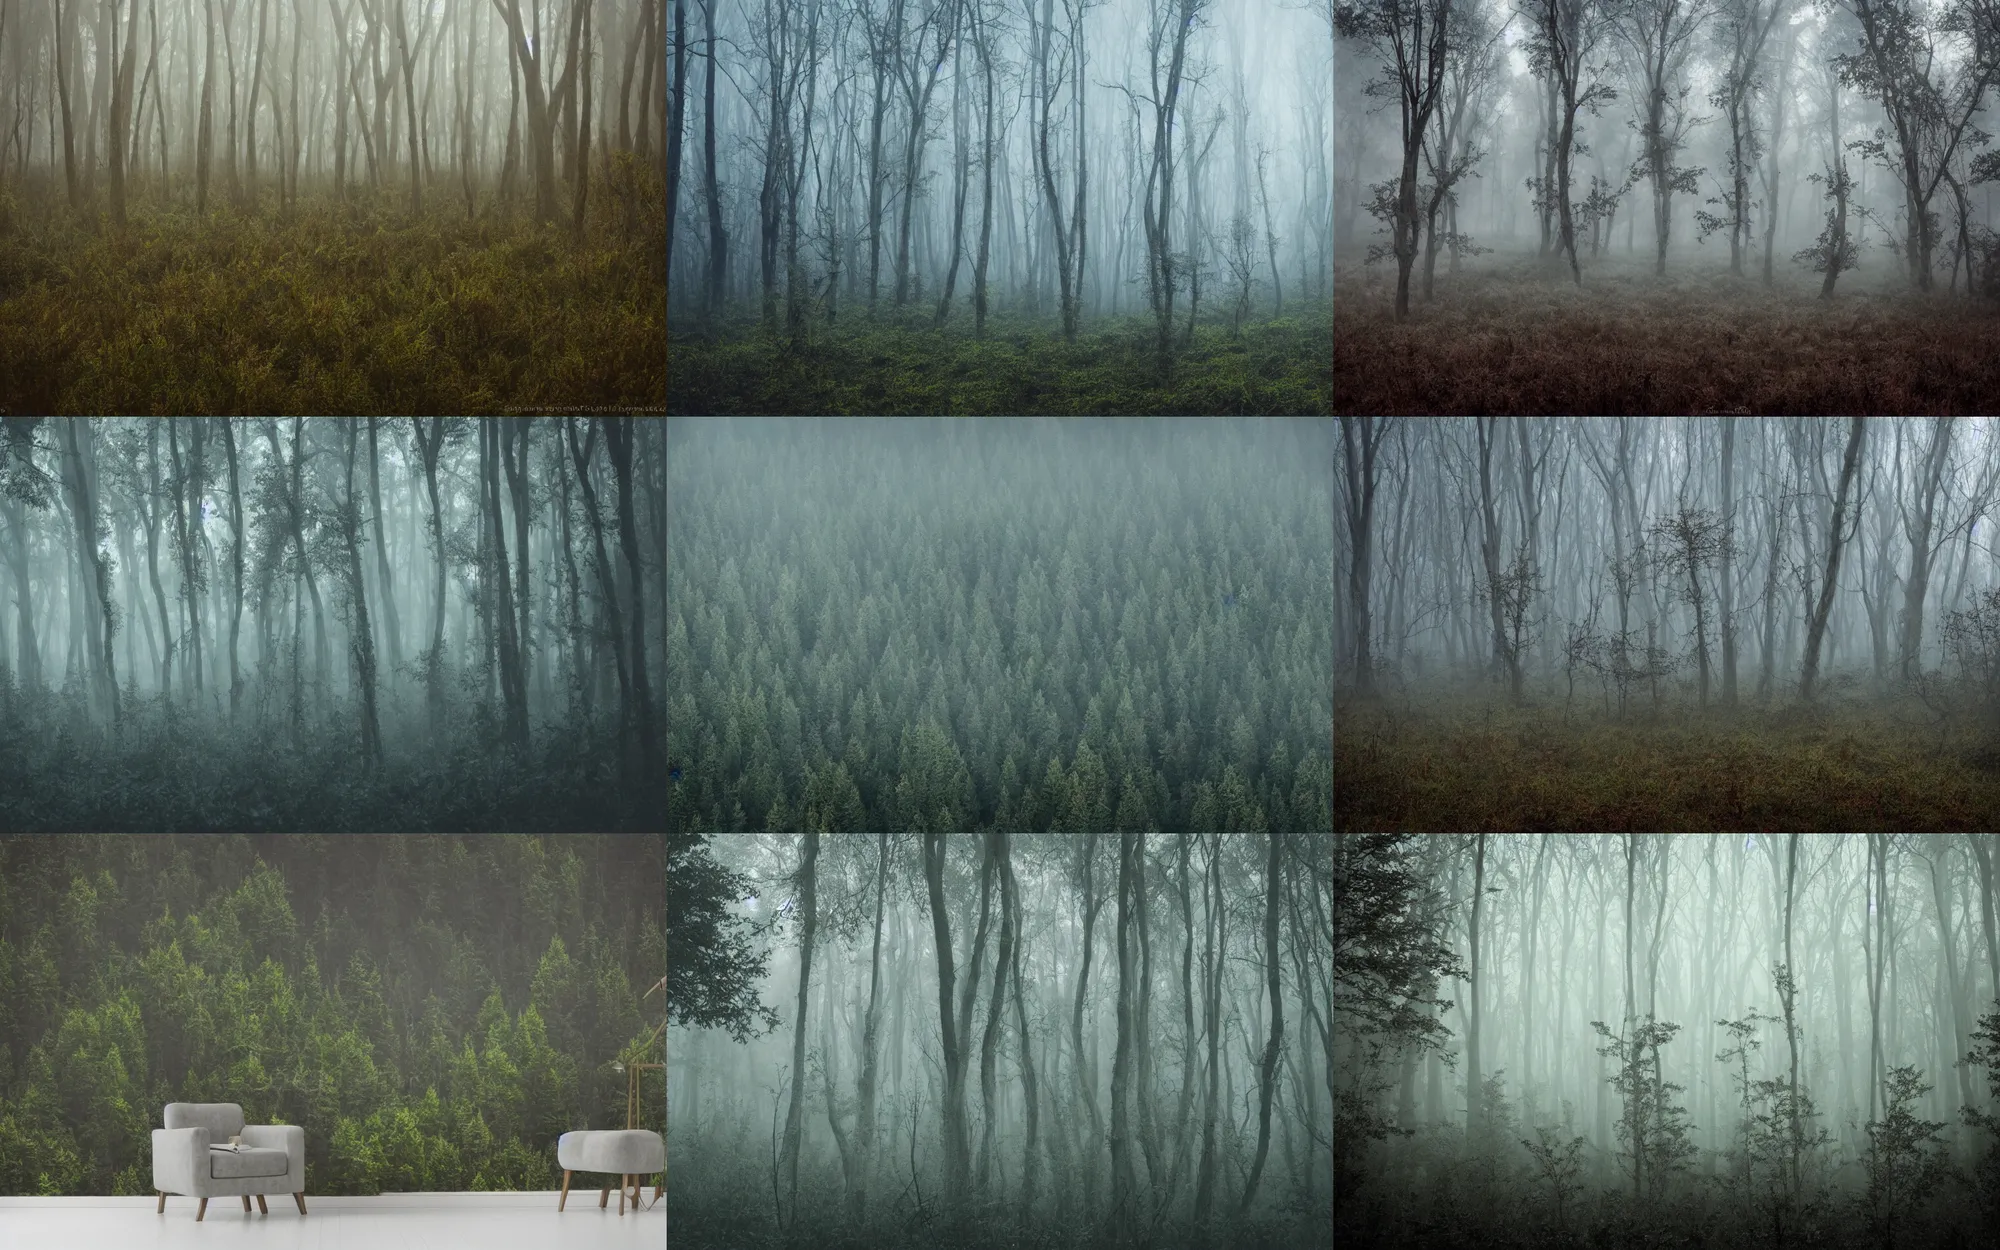 Prompt: alien planet landscape wild drnse foggy forest, intricate detail